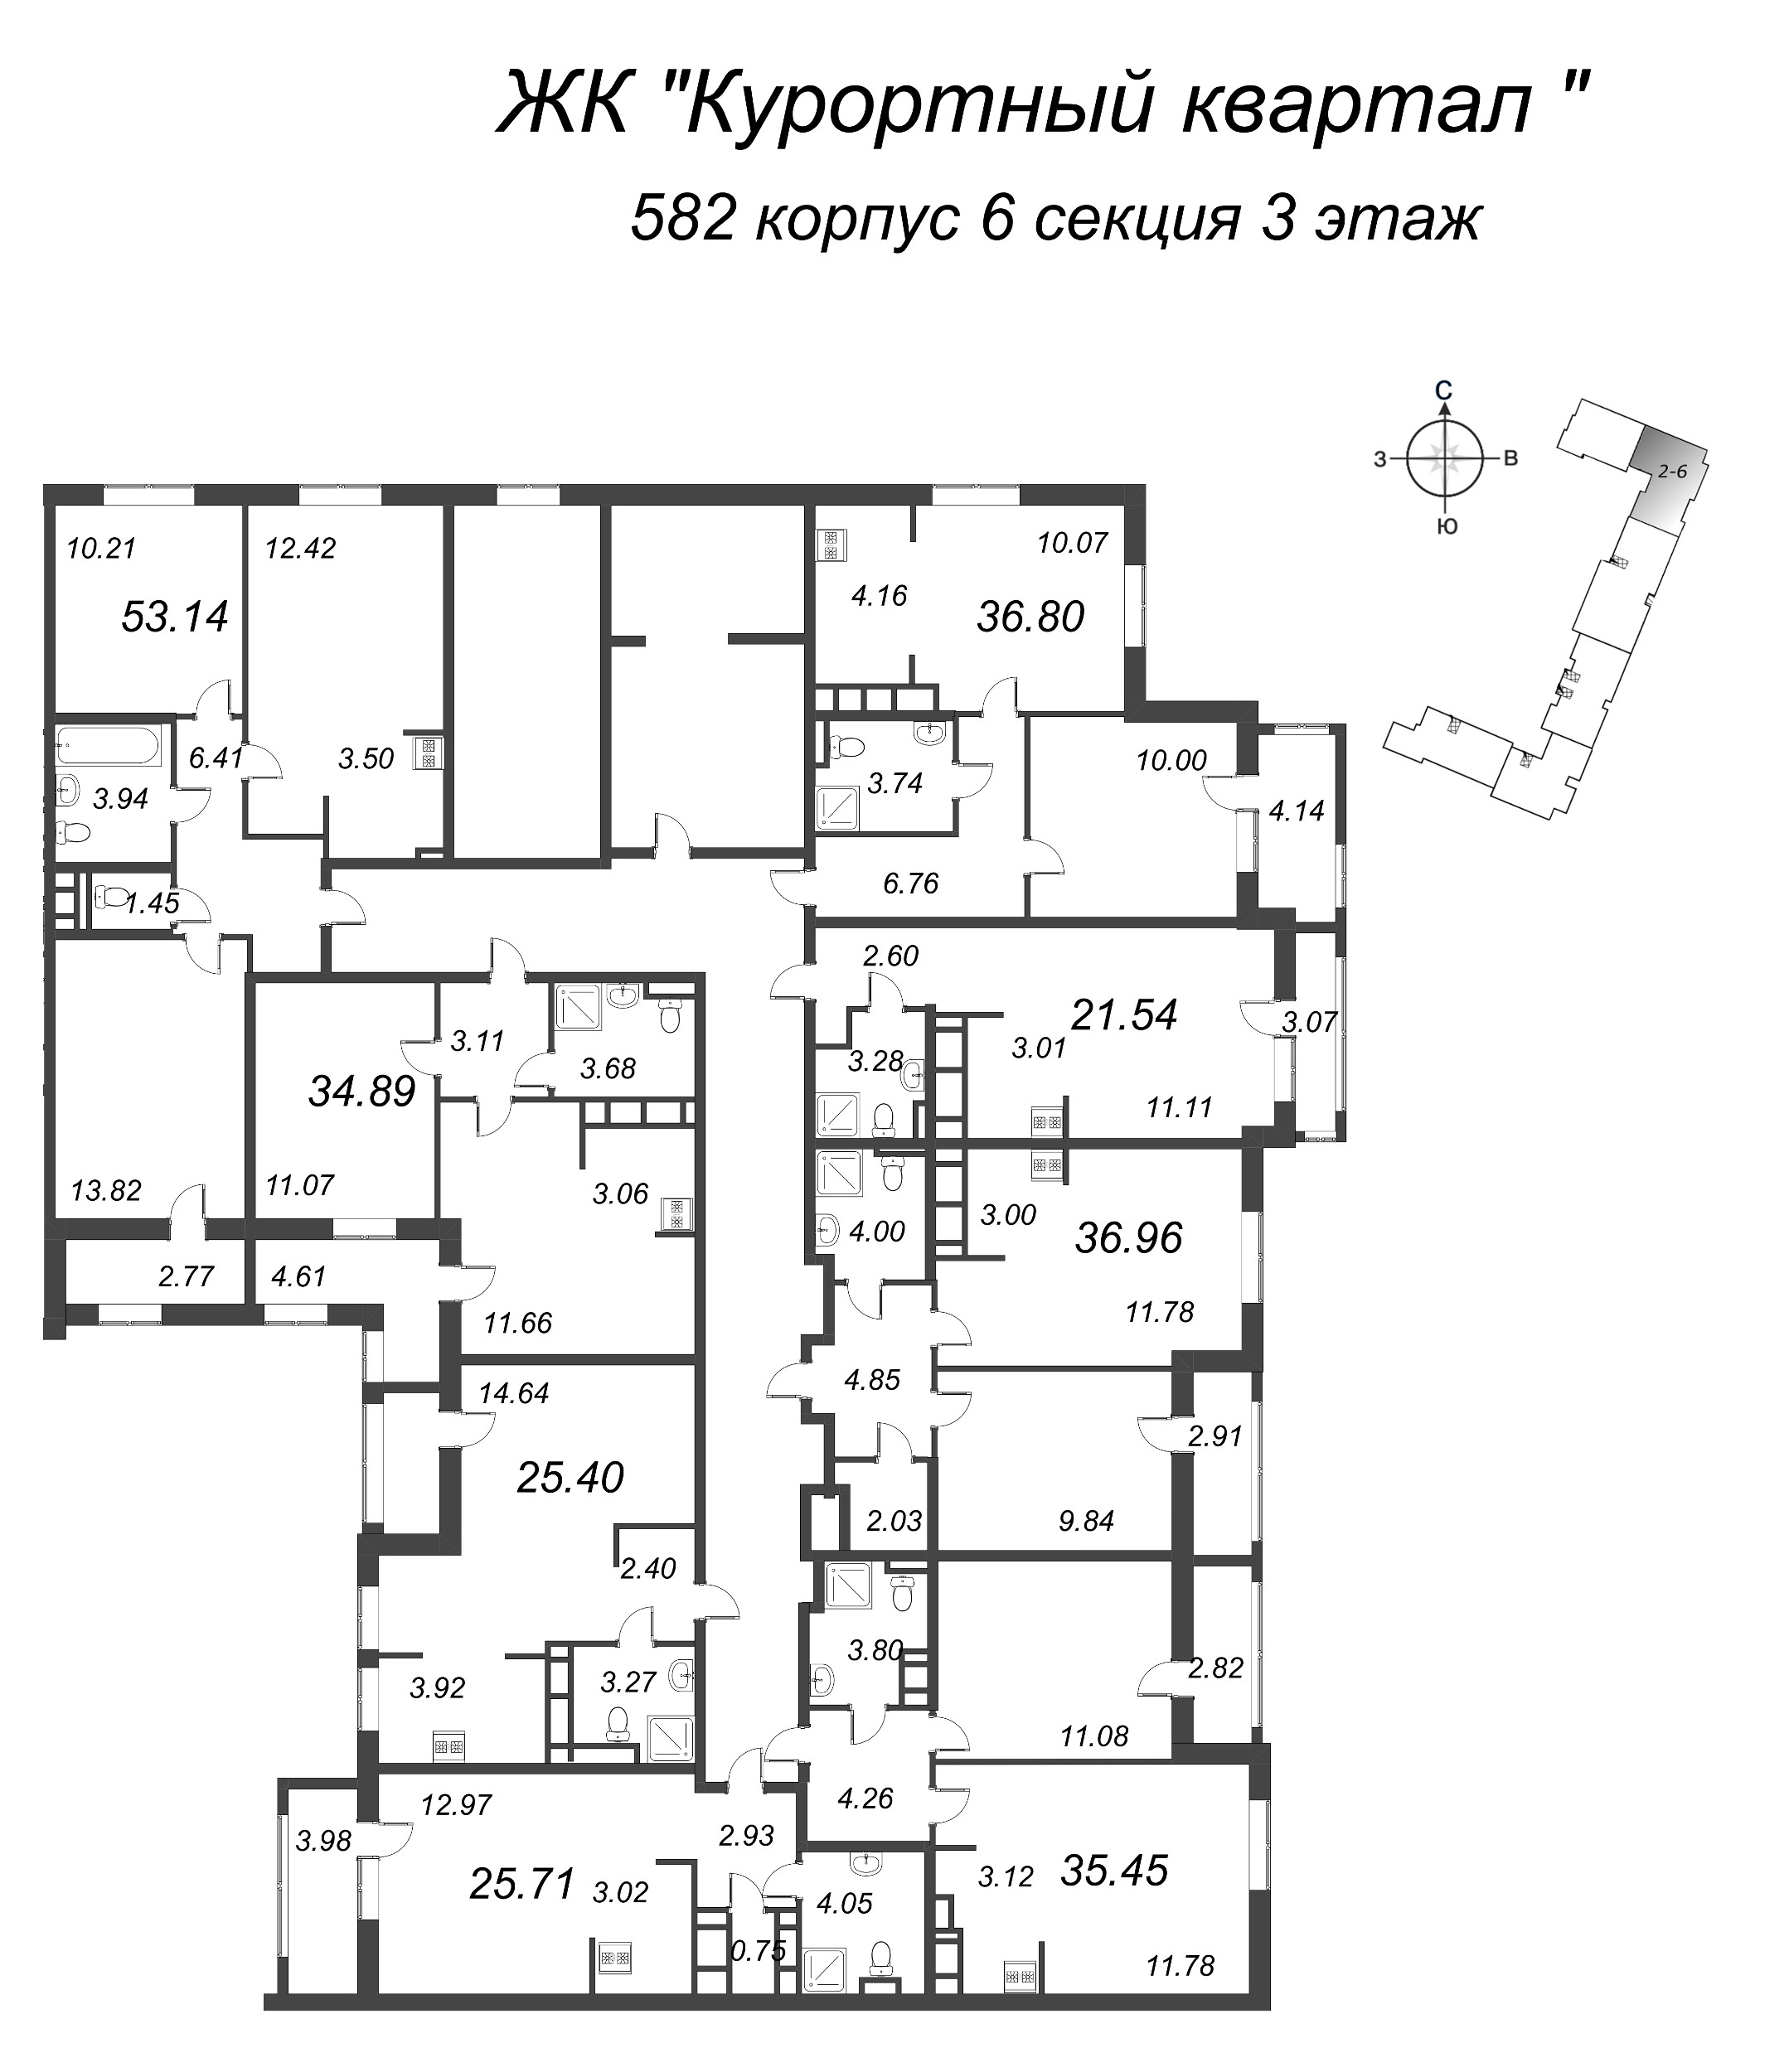 3-комнатная (Евро) квартира, 53.14 м² - планировка этажа